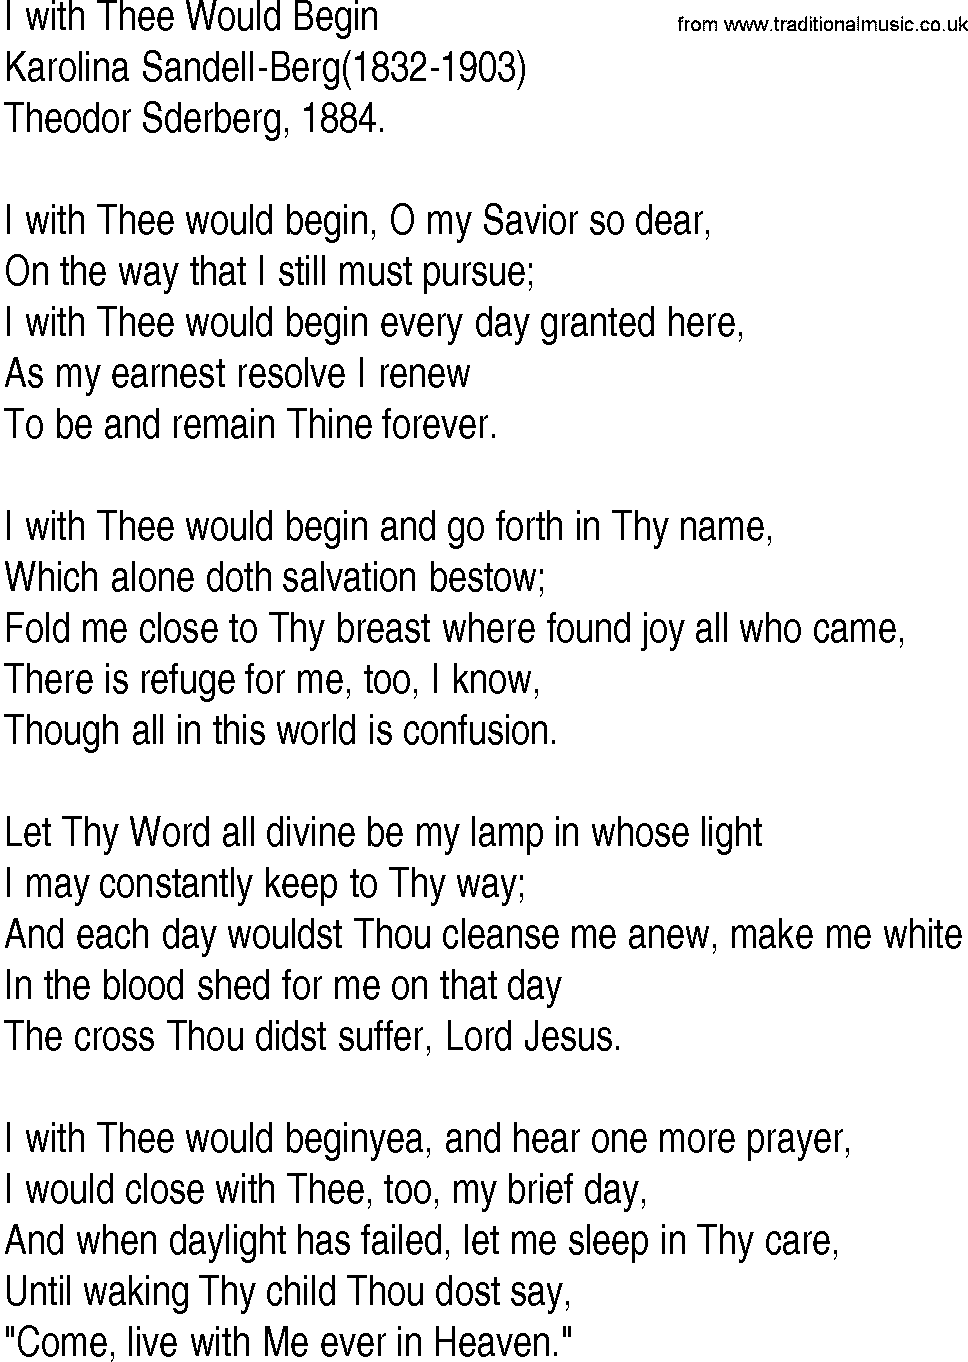 Hymn and Gospel Song: I with Thee Would Begin by Karolina SandellBerg lyrics